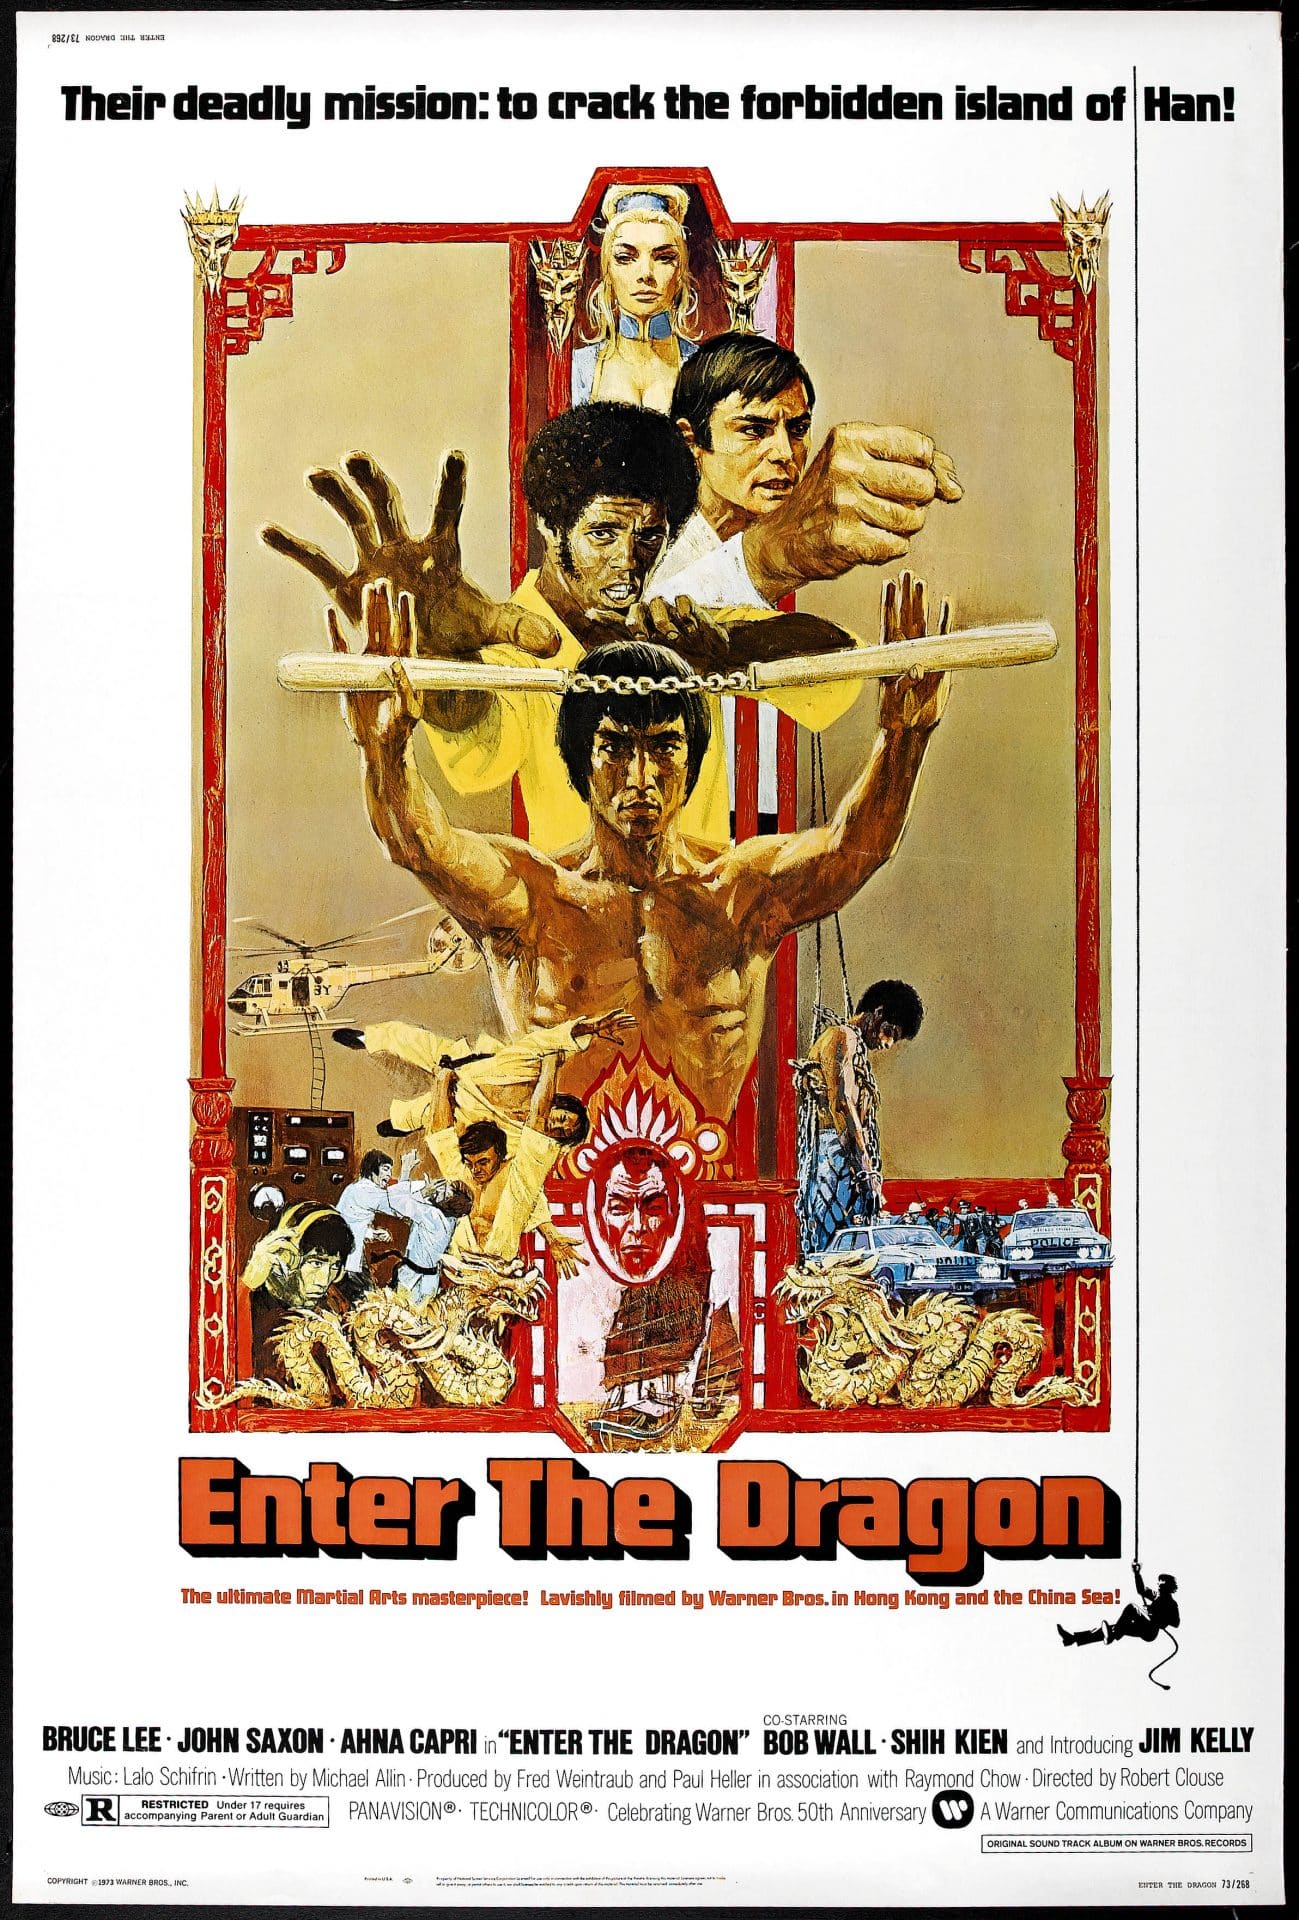 OPÉRATION DRAGON (1973) - Bruce Lee